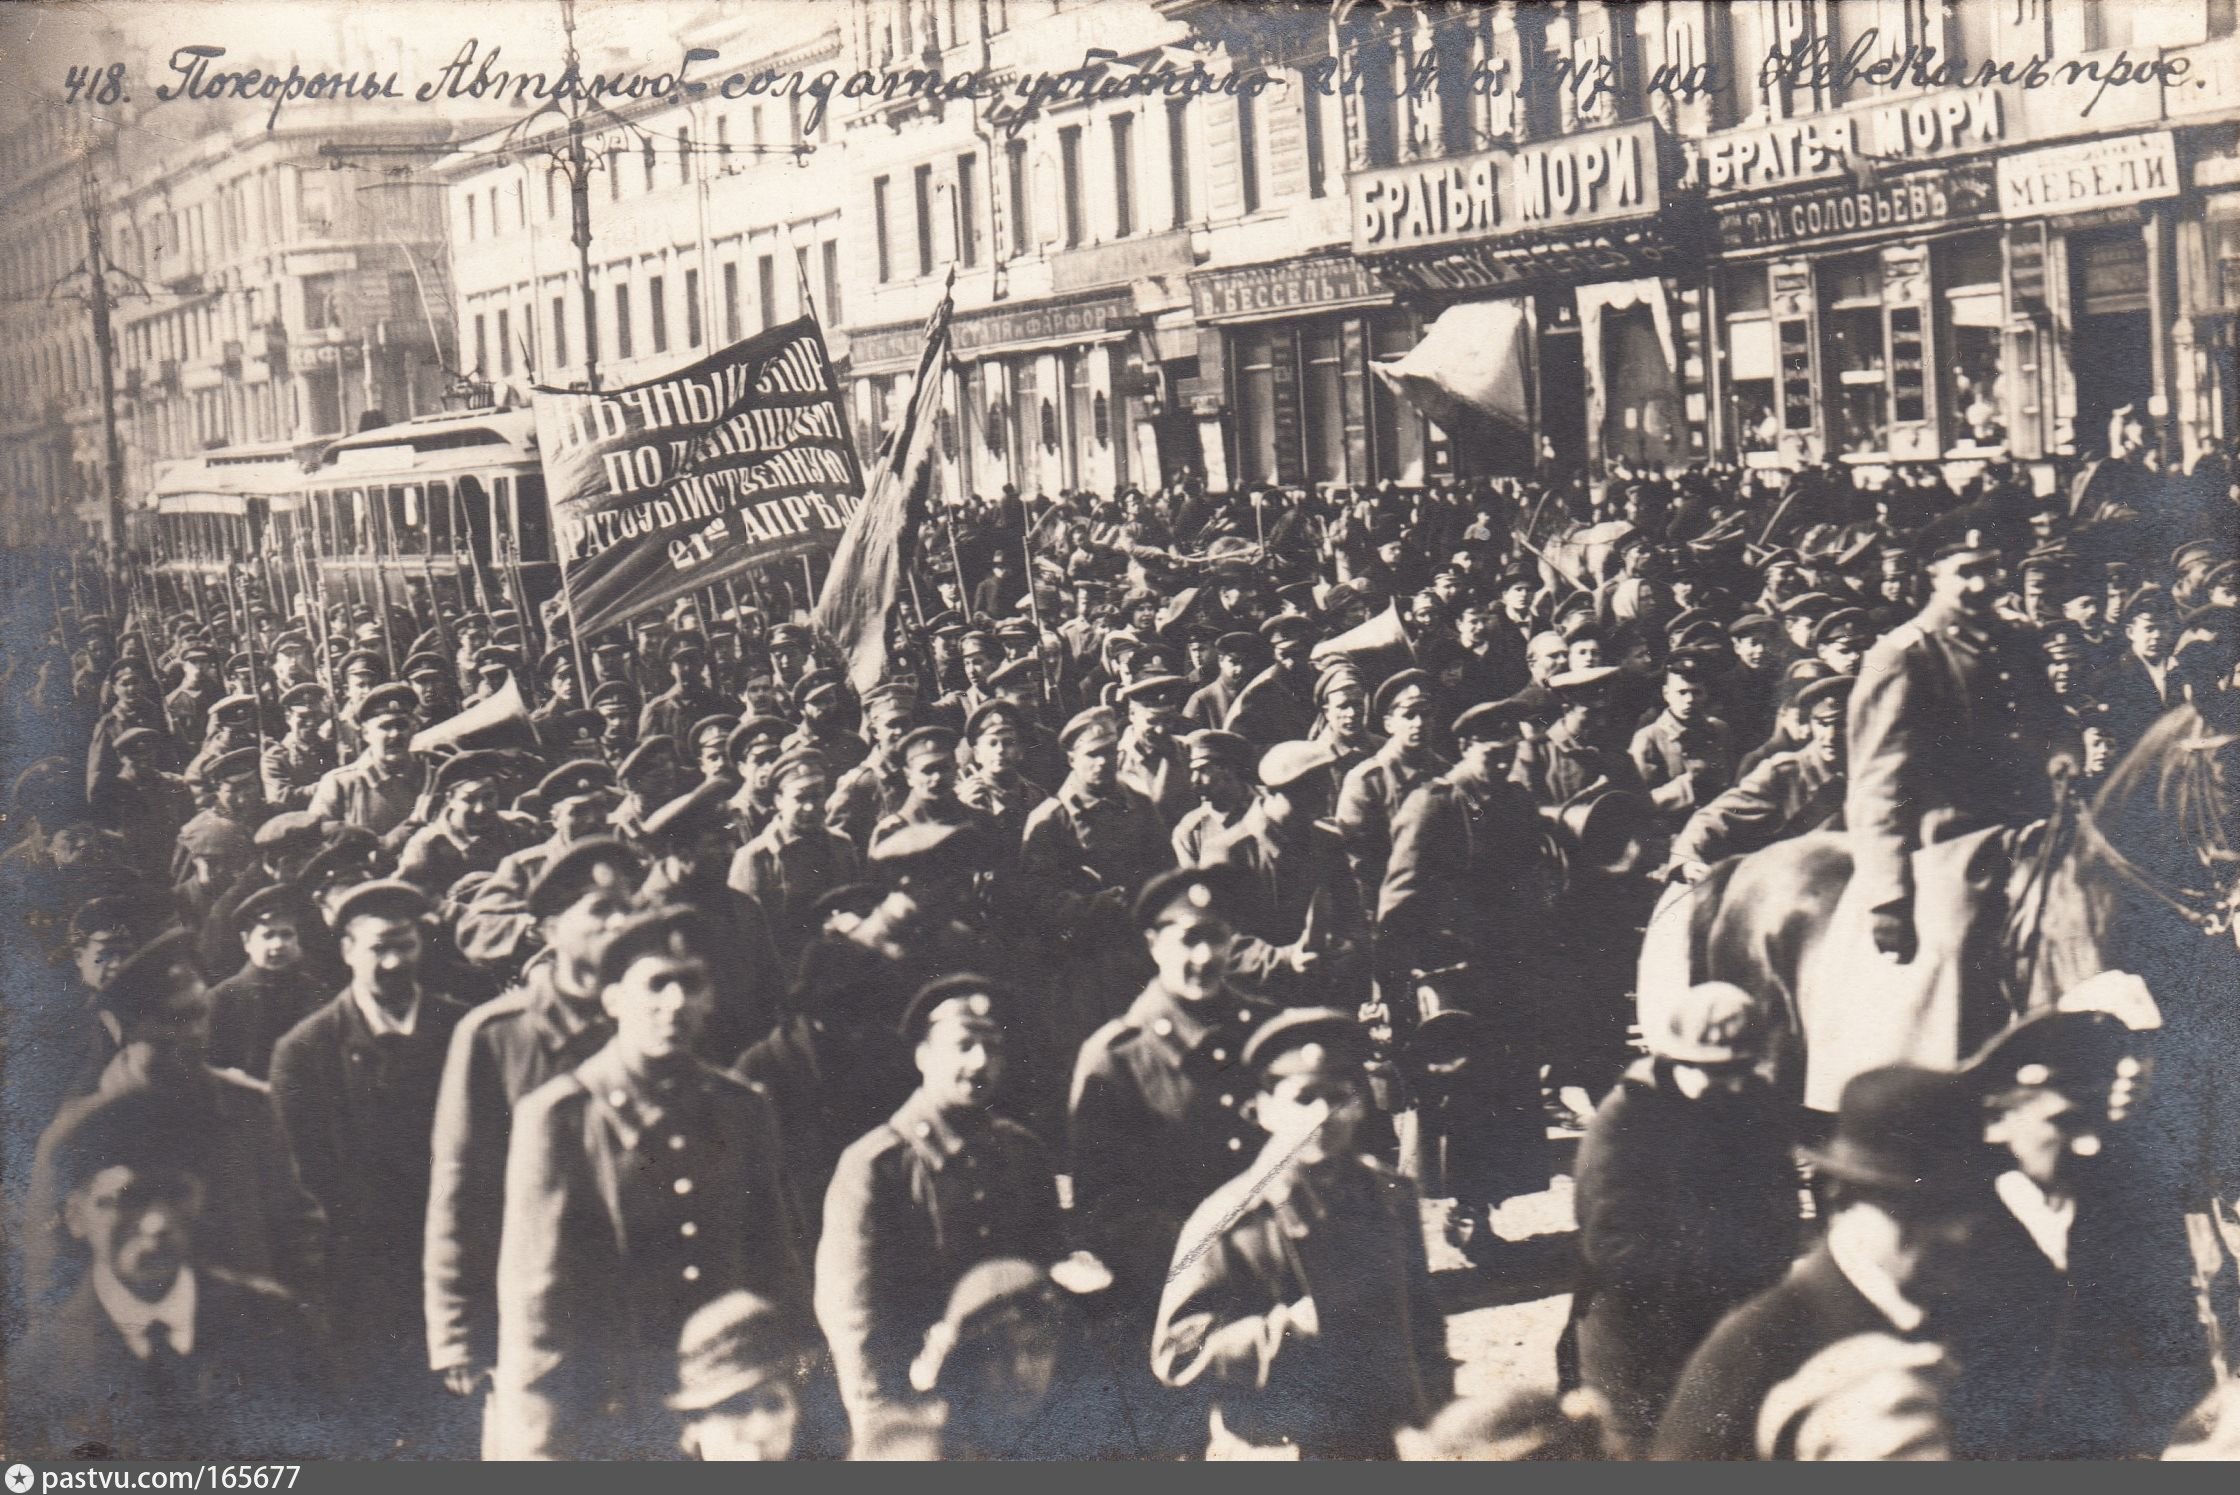 6 октября 1917 г. Революция в Петрограде 1917. Петроград в 1917 году. Февральская революция 1917. Революция 1917 года Петроград.